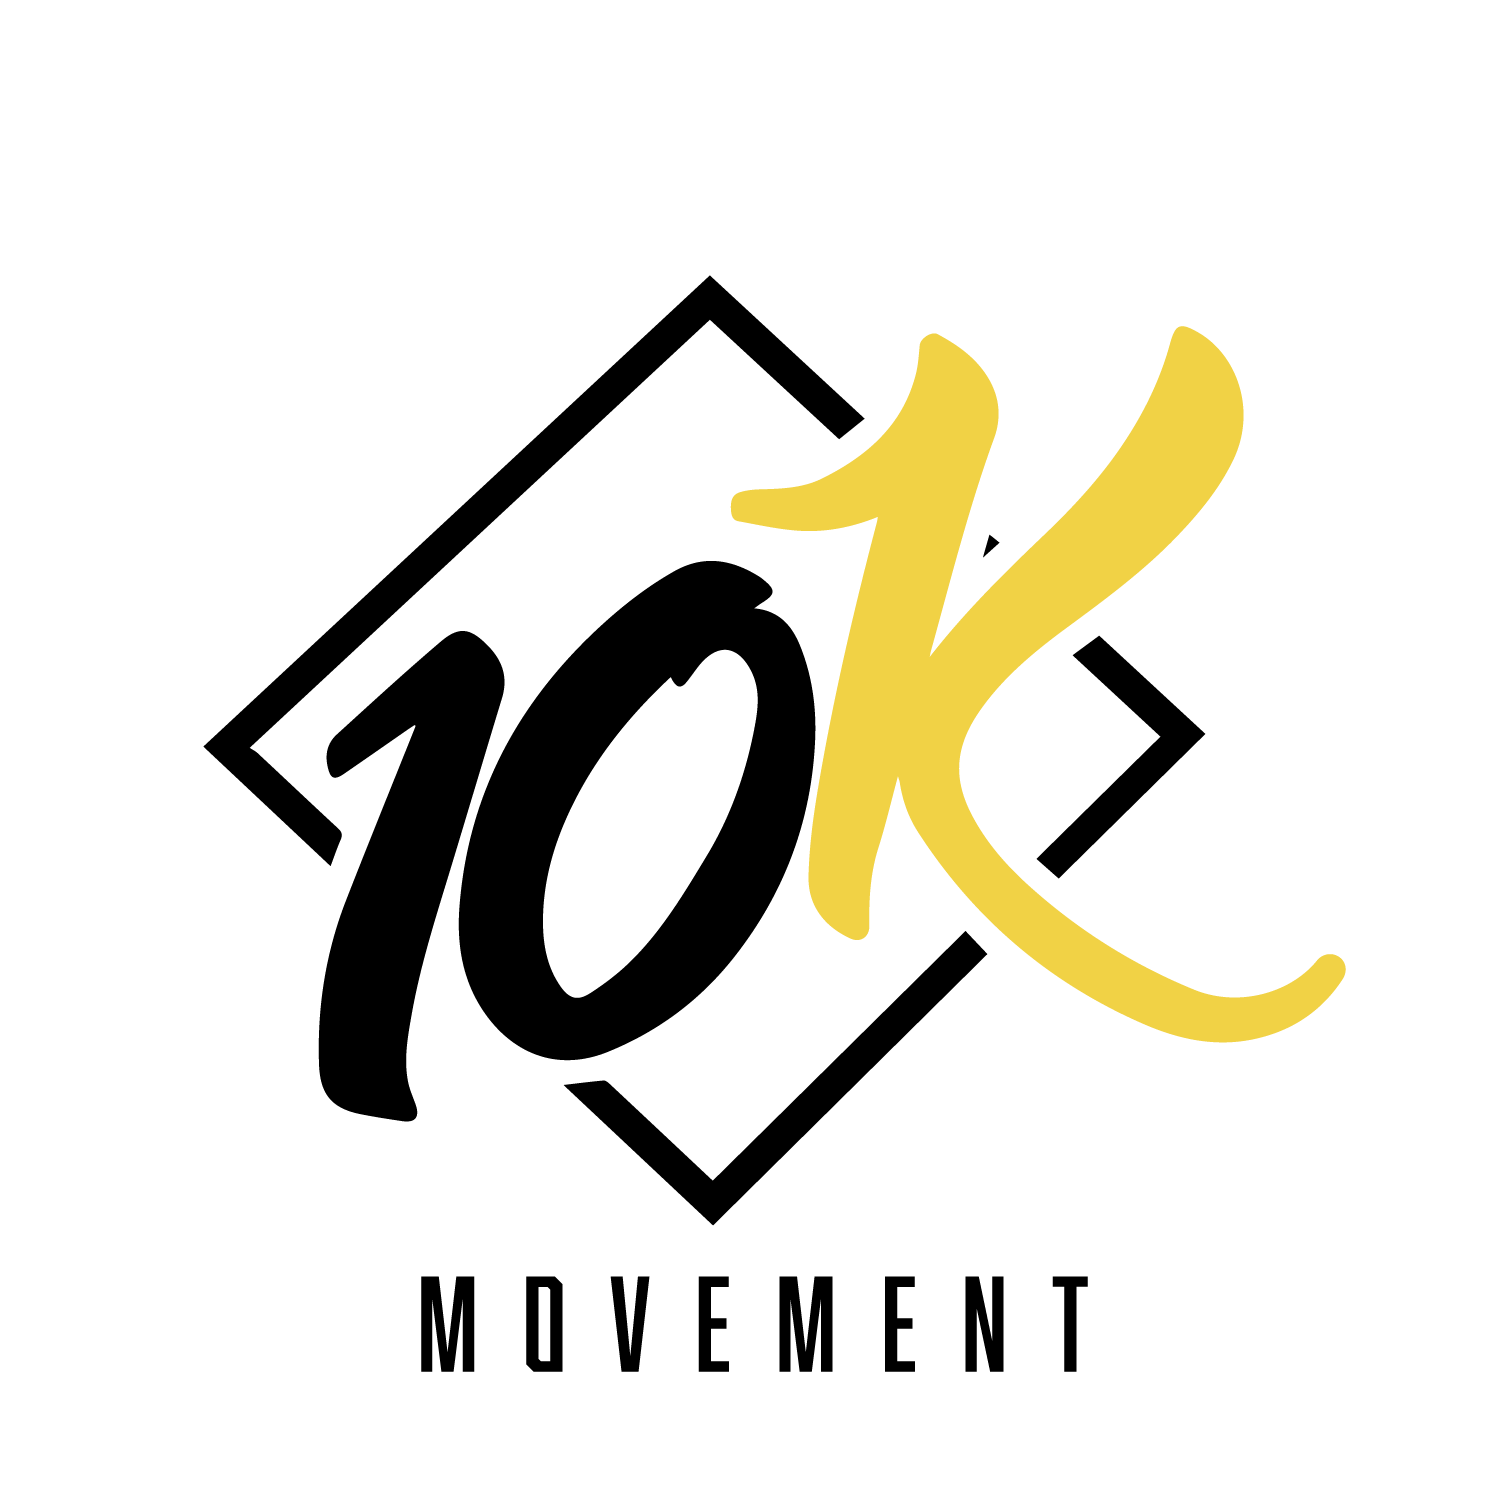 10K MOVEMENT